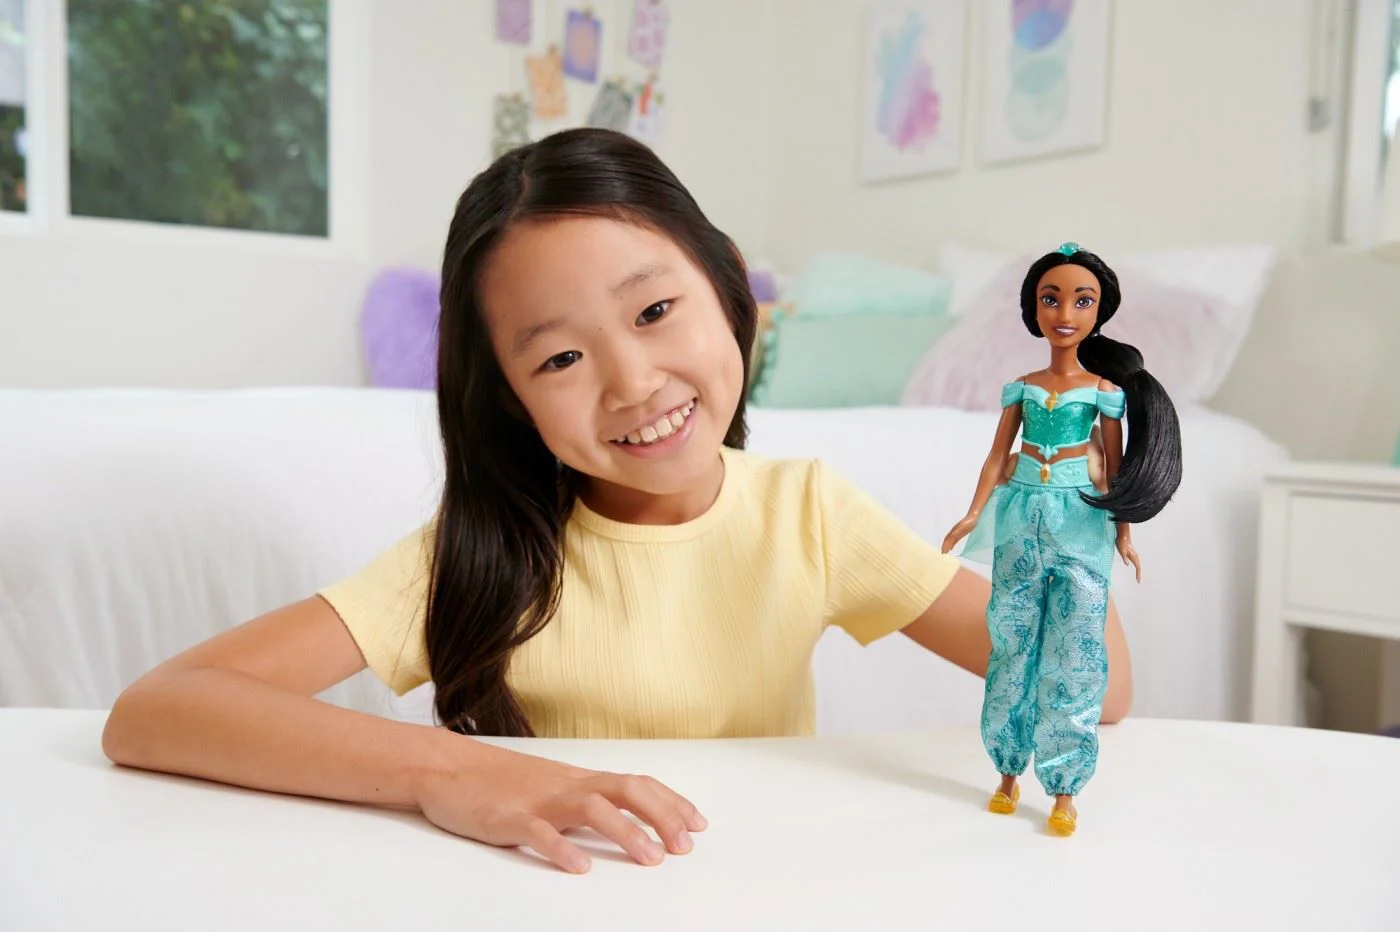 Papusa Barbie Disney Princess Jasmine